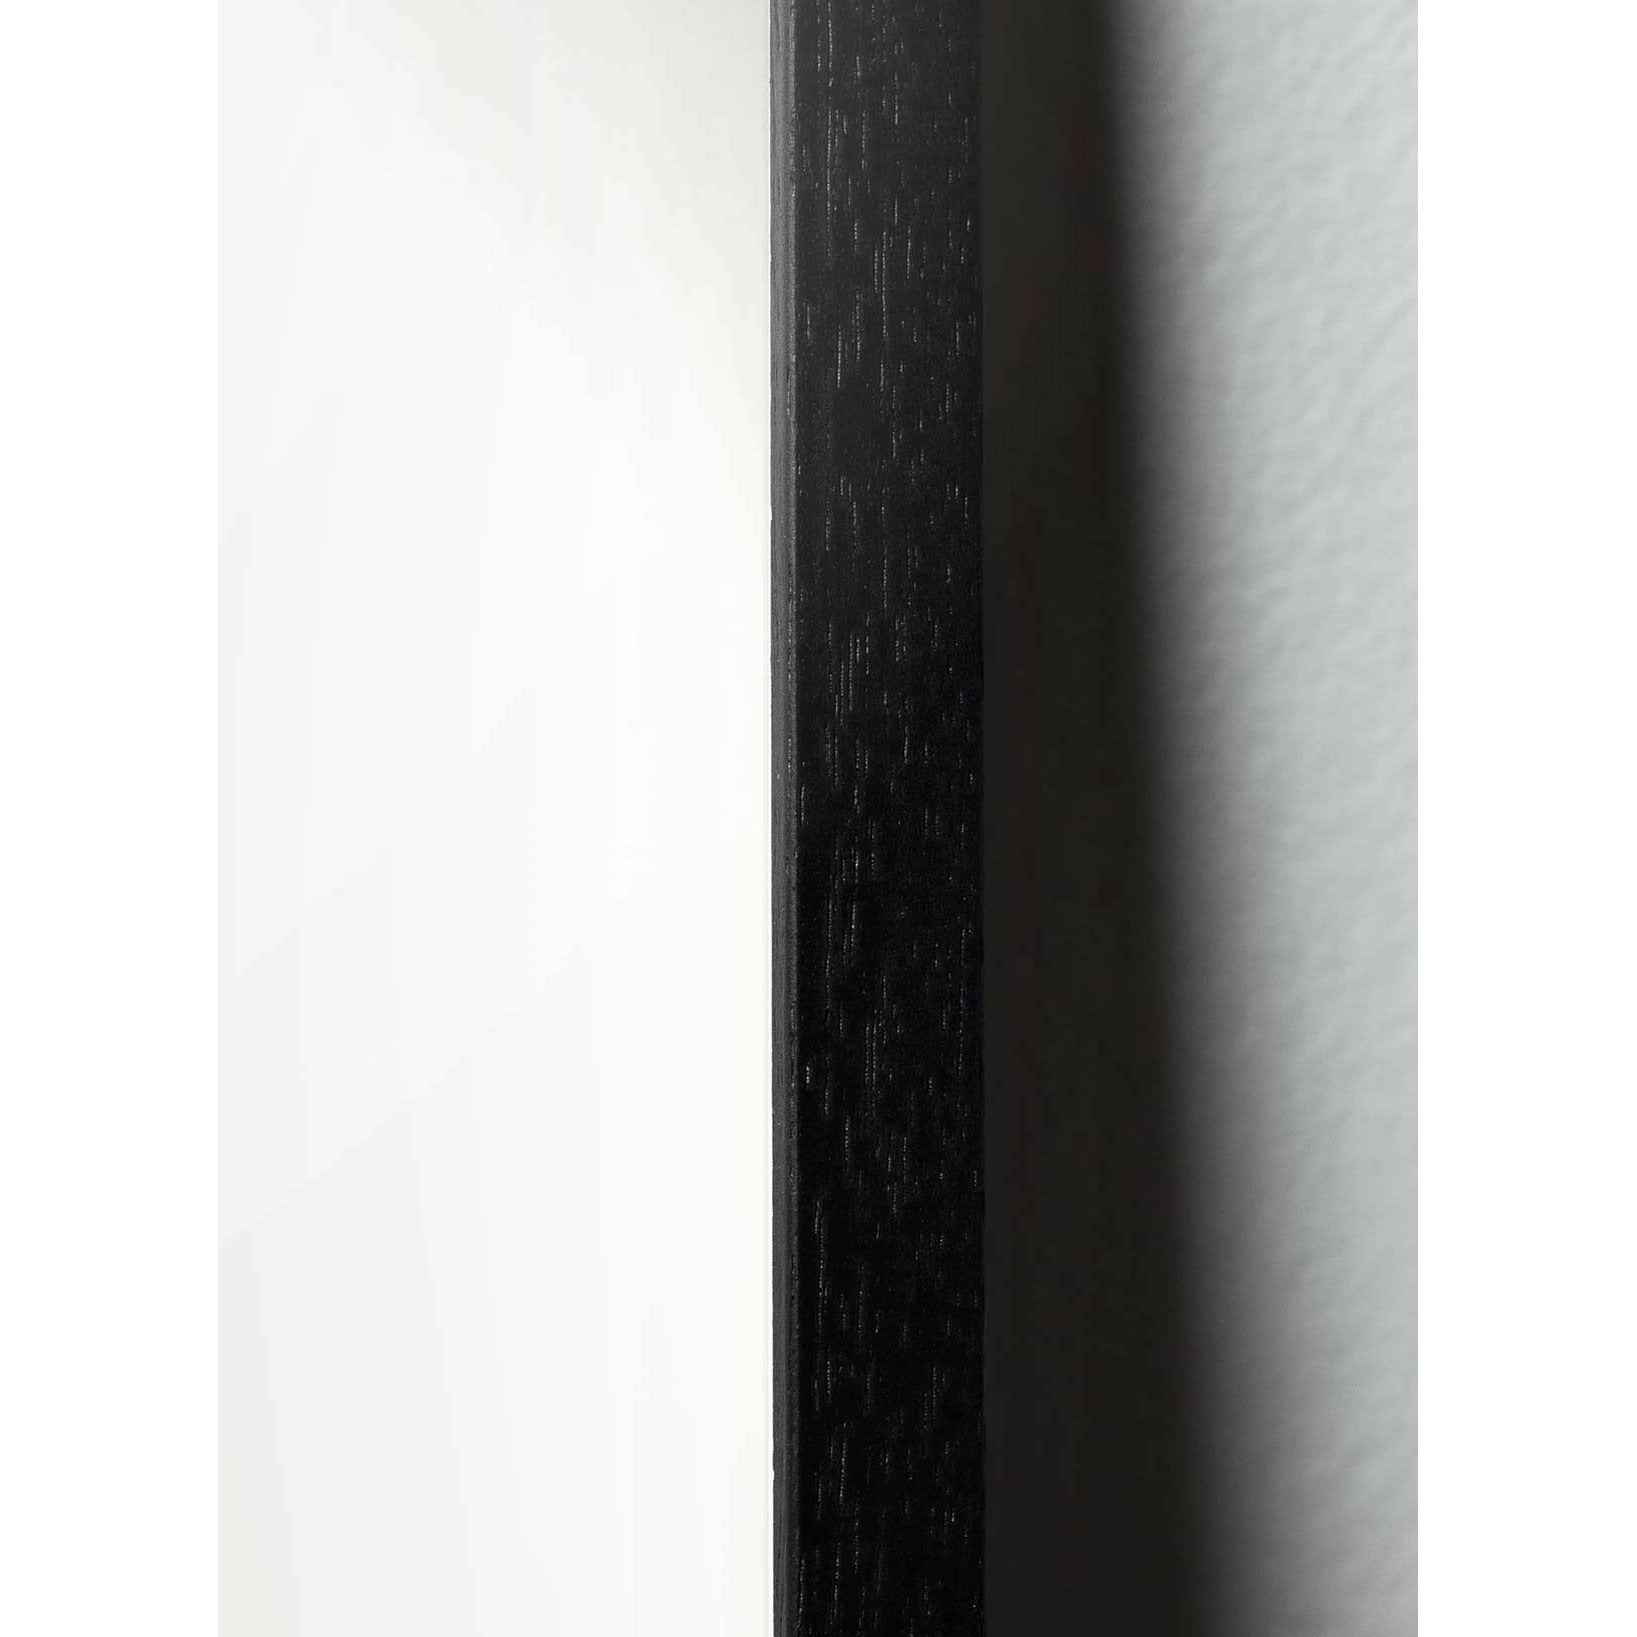 Póster de desfile de swan de creación, marco en madera lacada negra, 30x40 cm